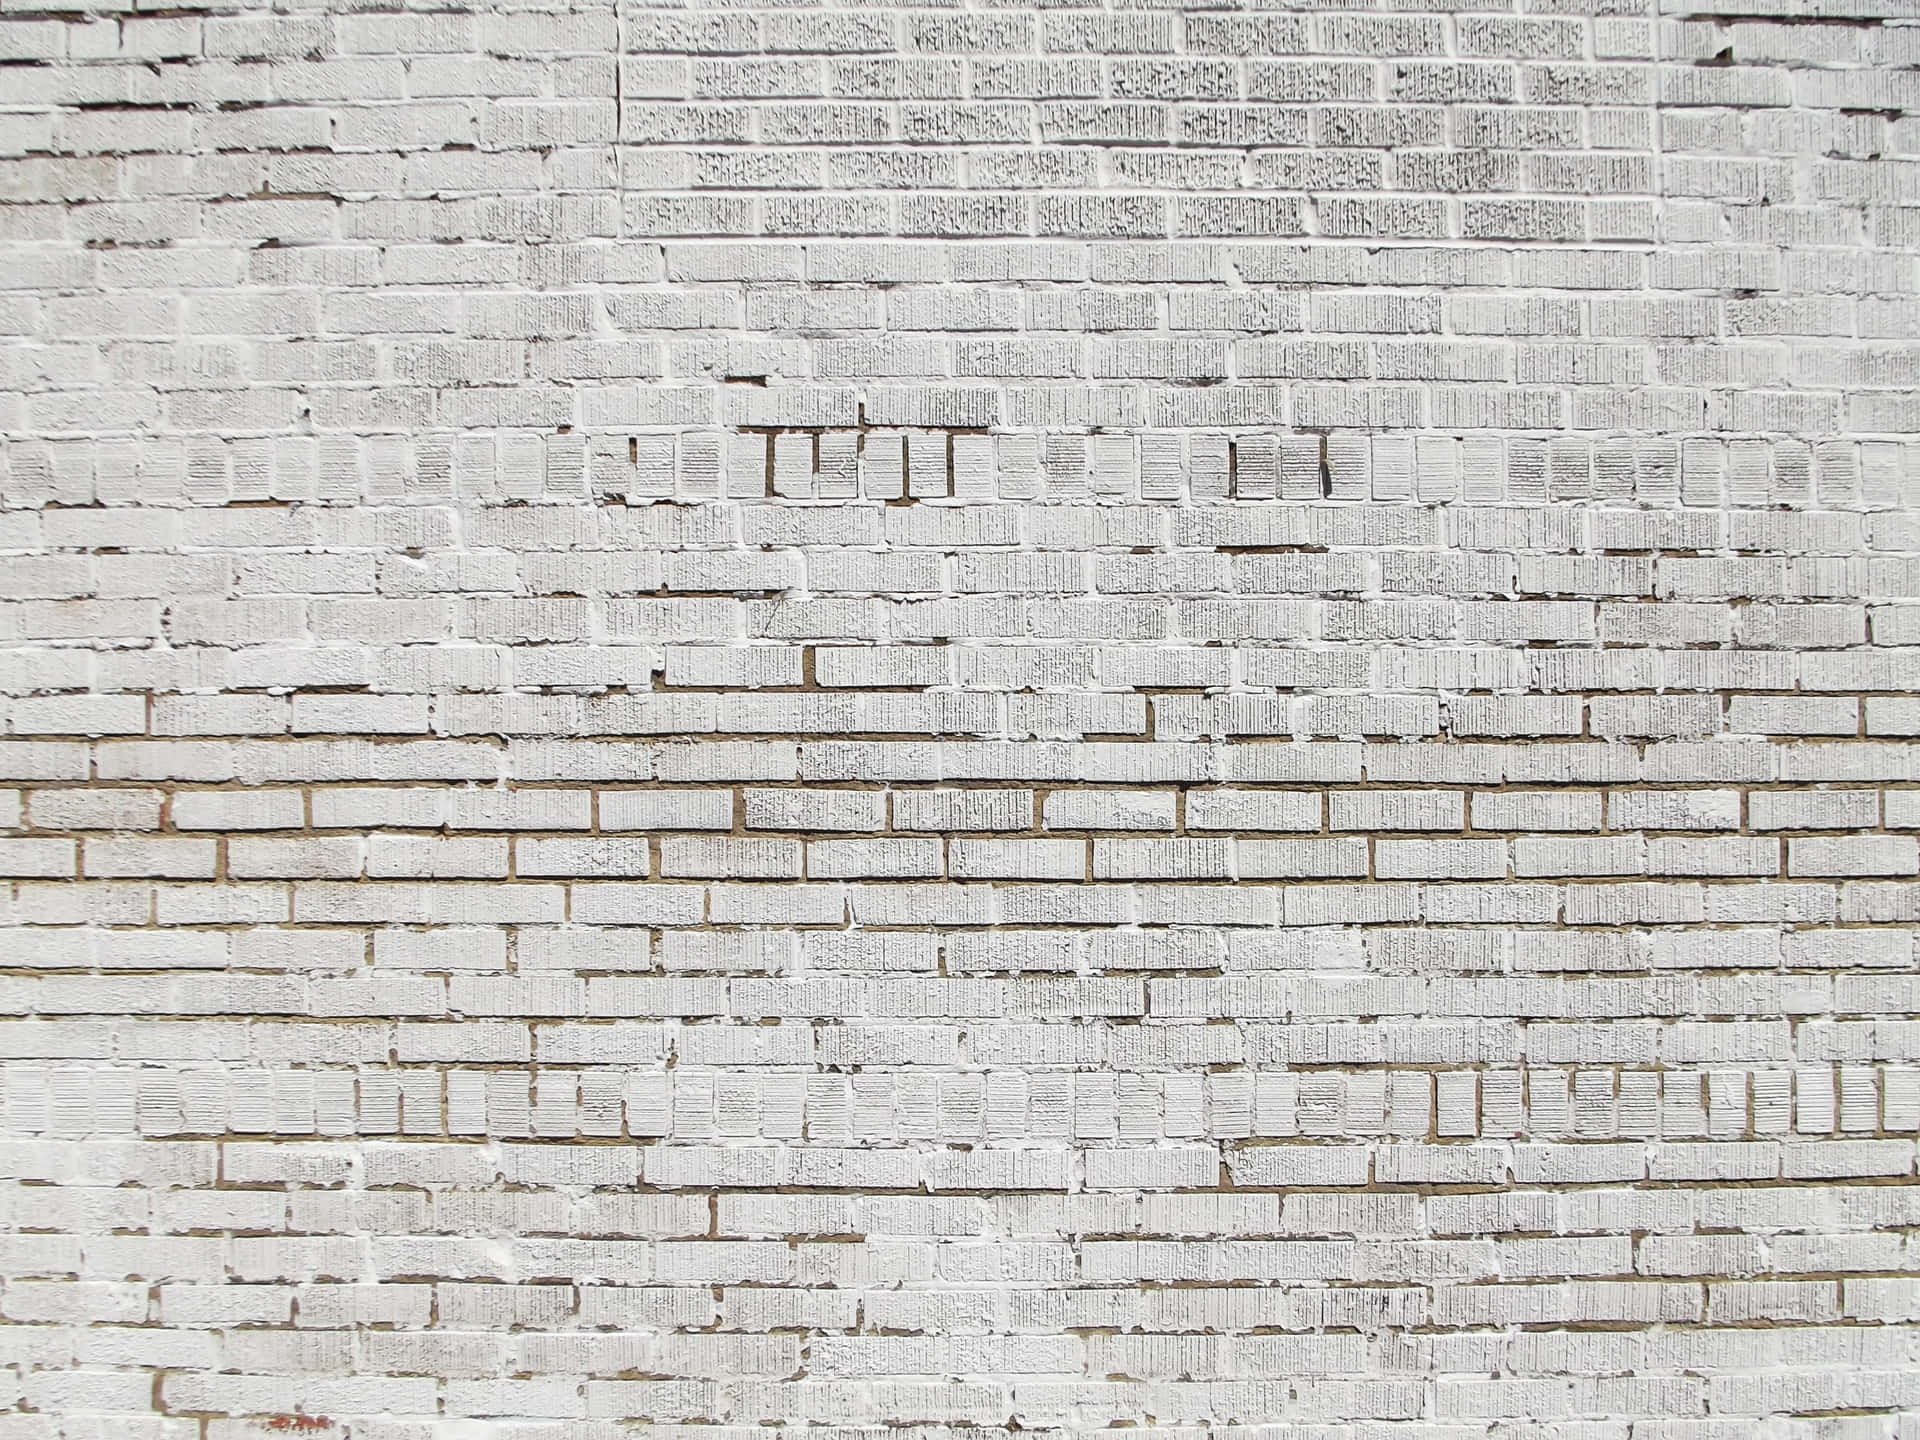 A White Brick Wall With A White Brick Wall